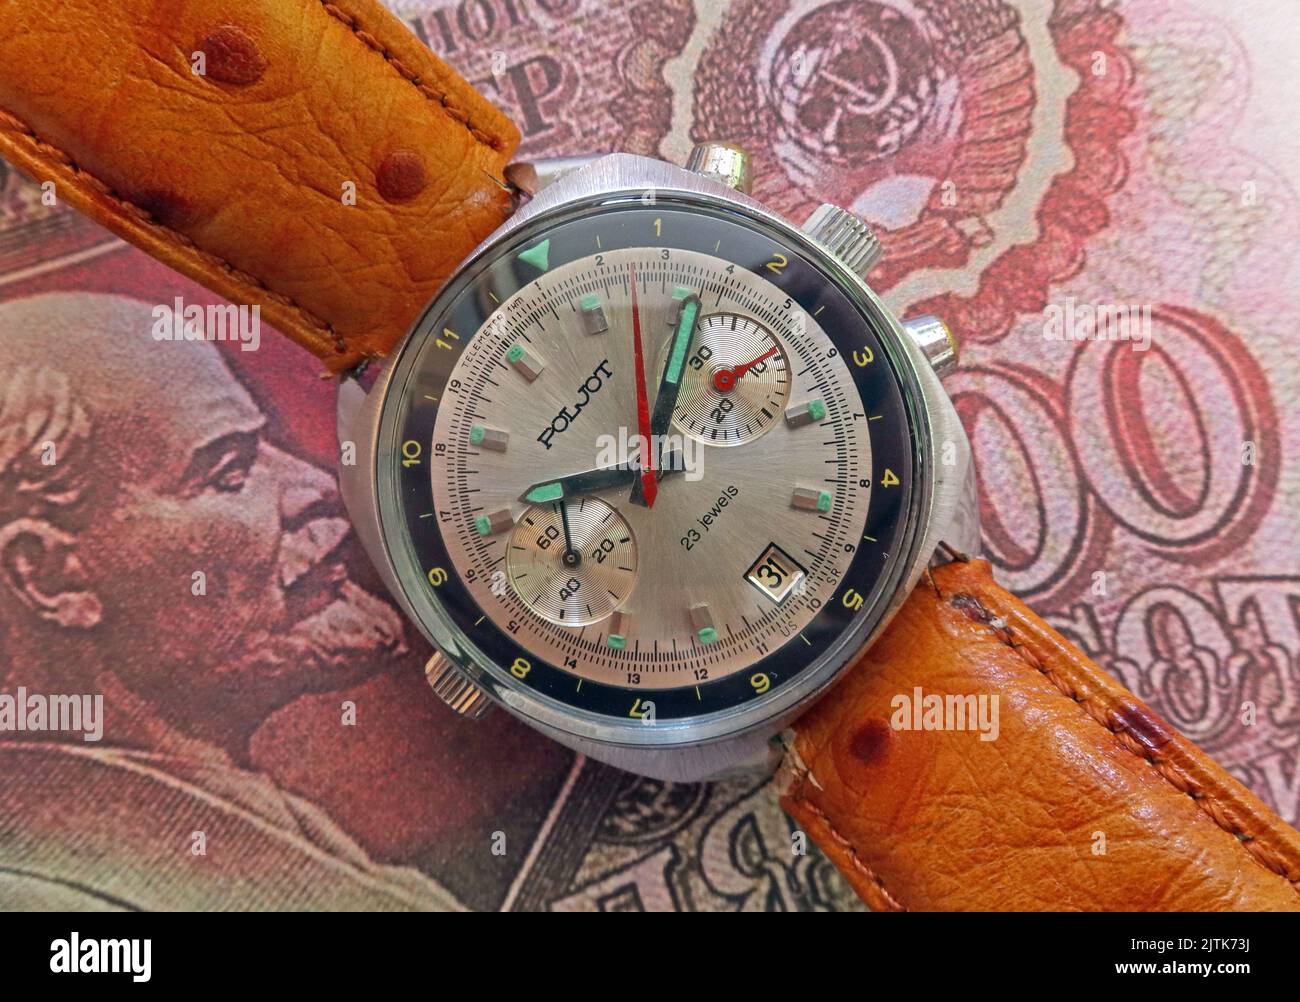 USSR Poljot Chronograph Sturmanskie watch - compressor style military style Stock Photo